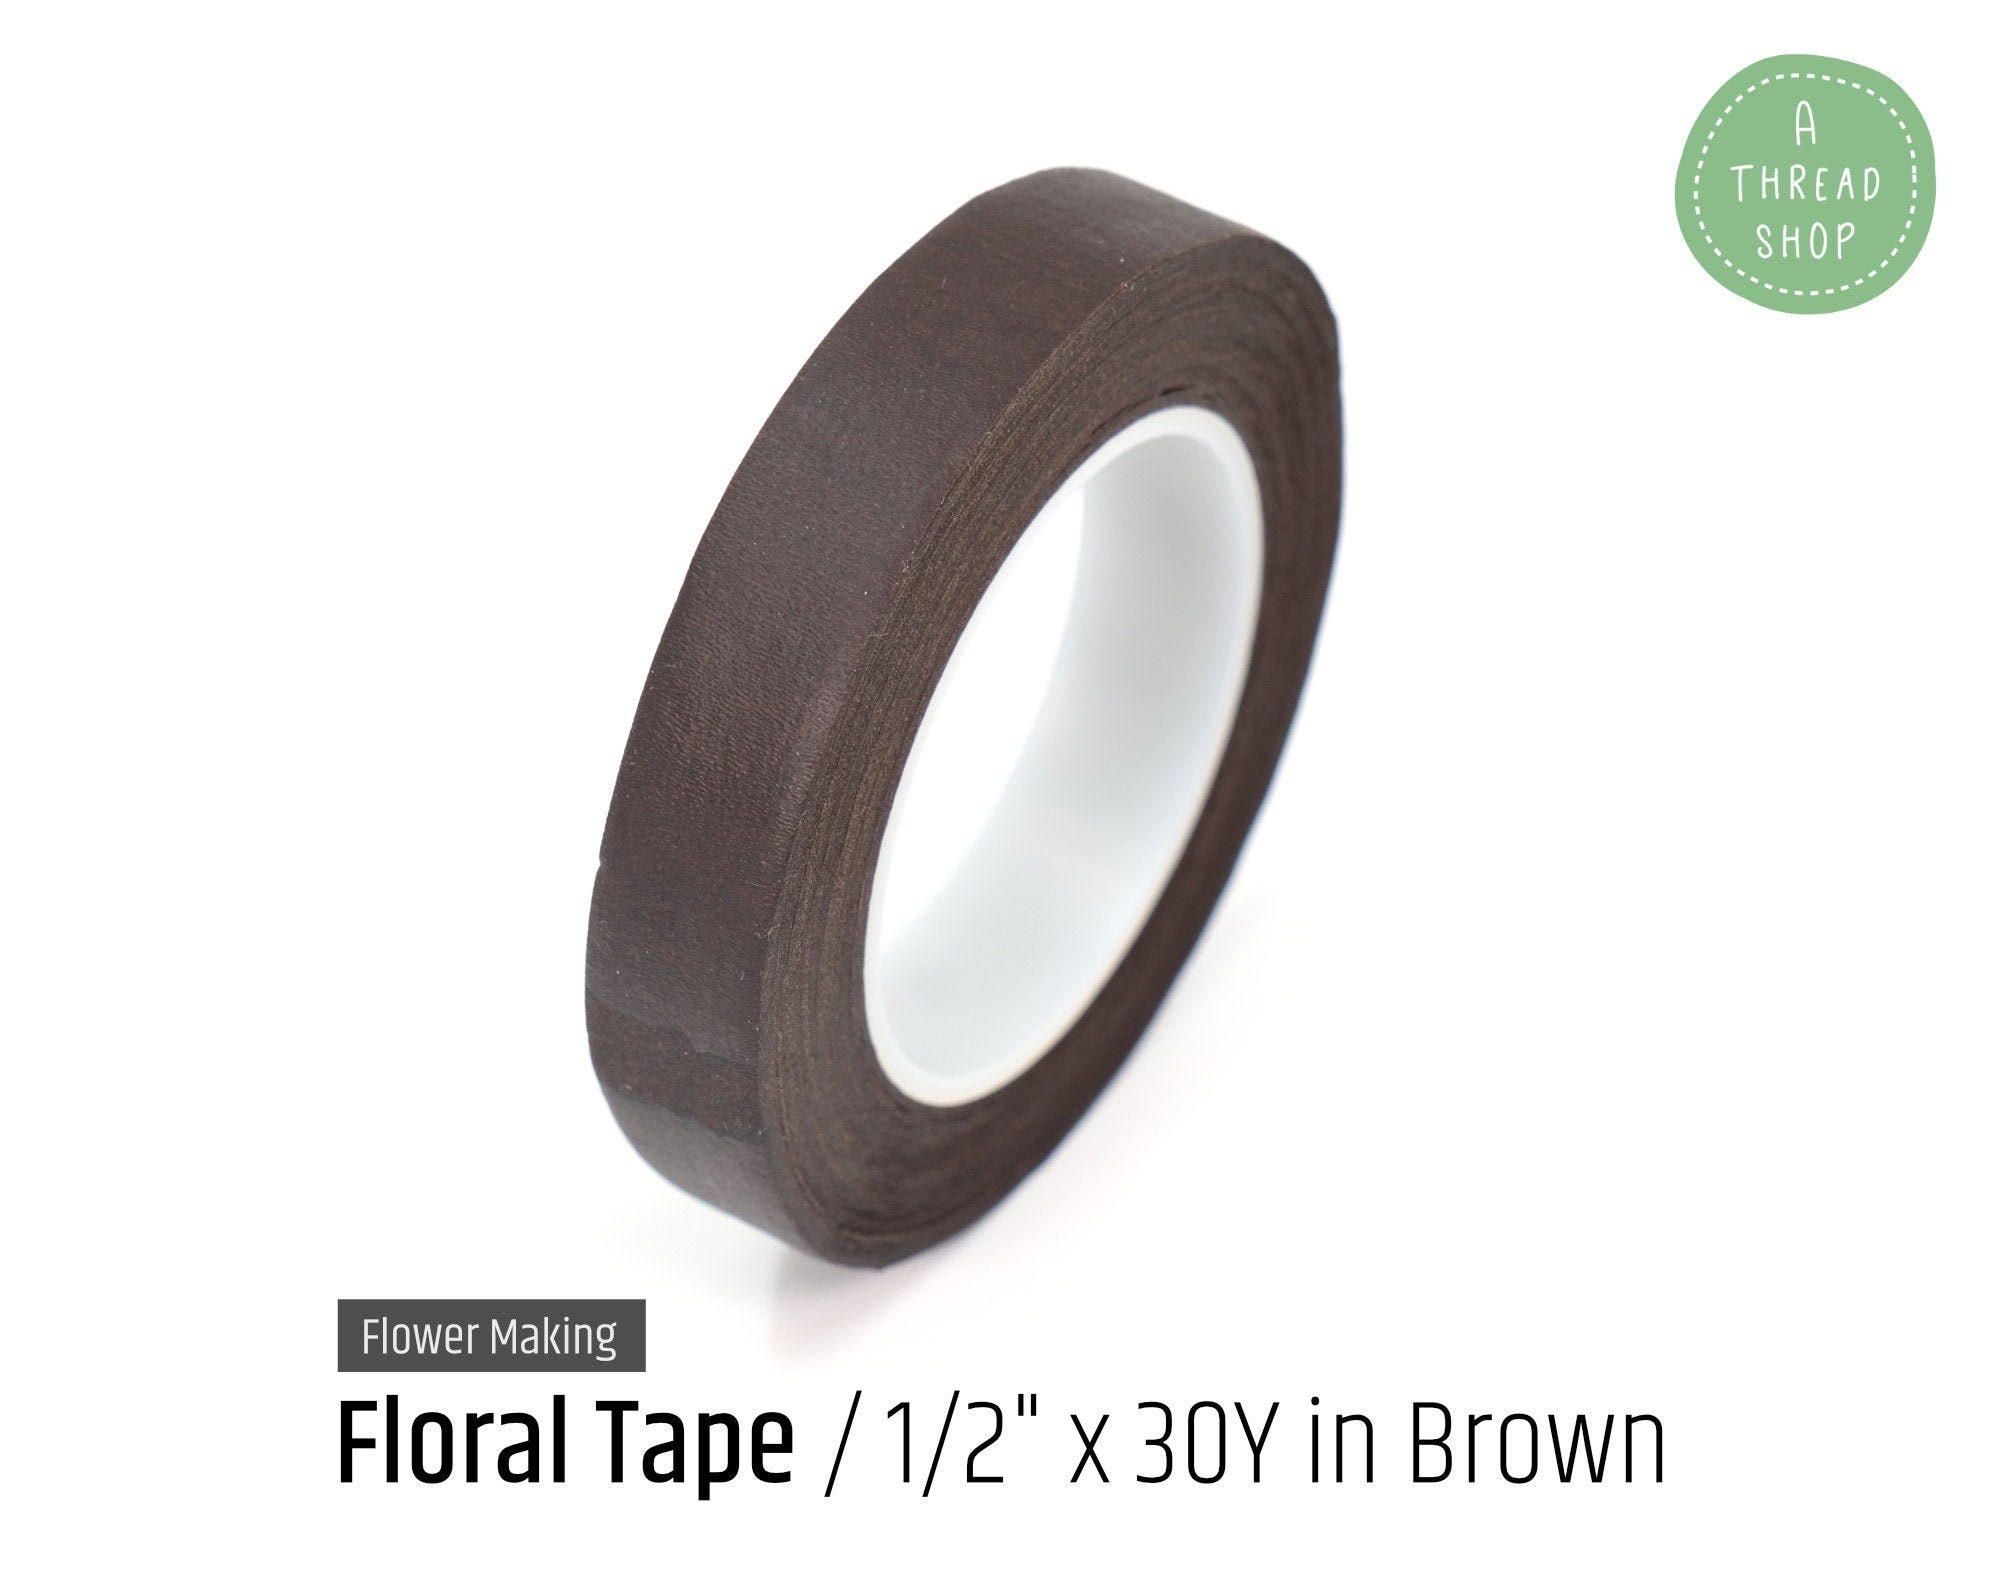 1/2 X 30 Yard Brown Floral Tape Flower Marking Supplies 